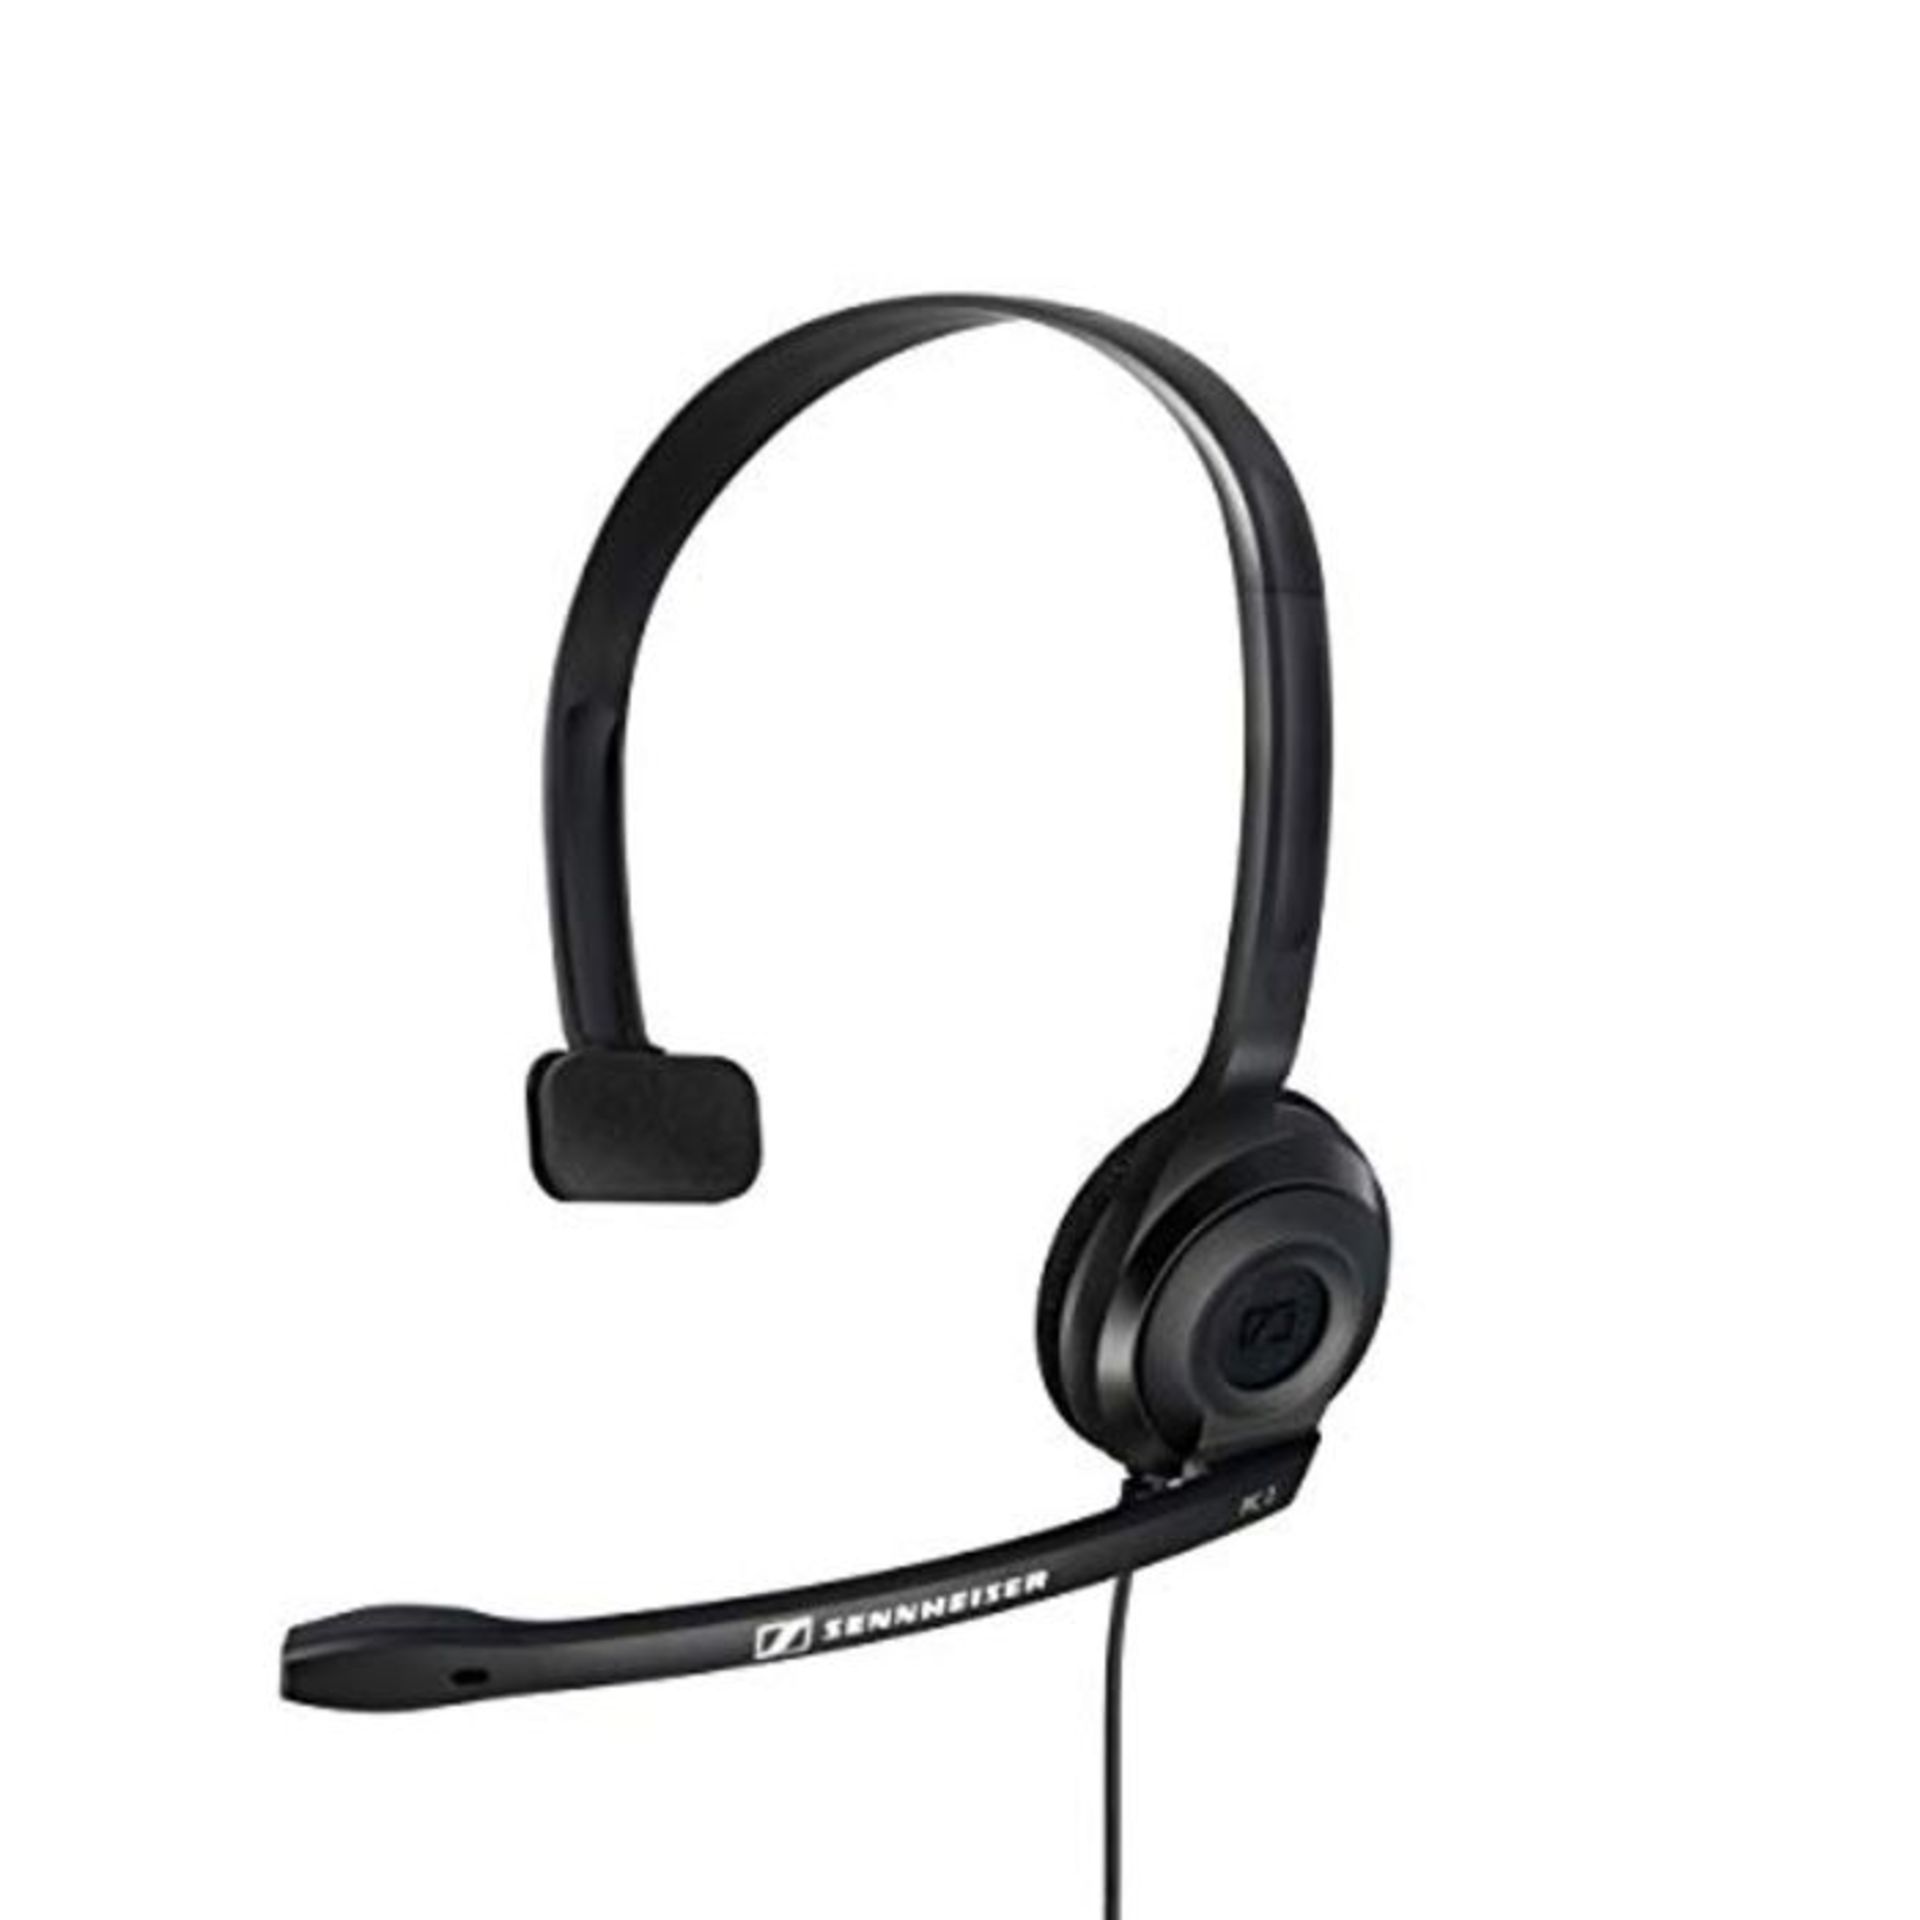 Sennheiser PC 2 CHAT Lightweight Telephony On-Ear Headset - Black